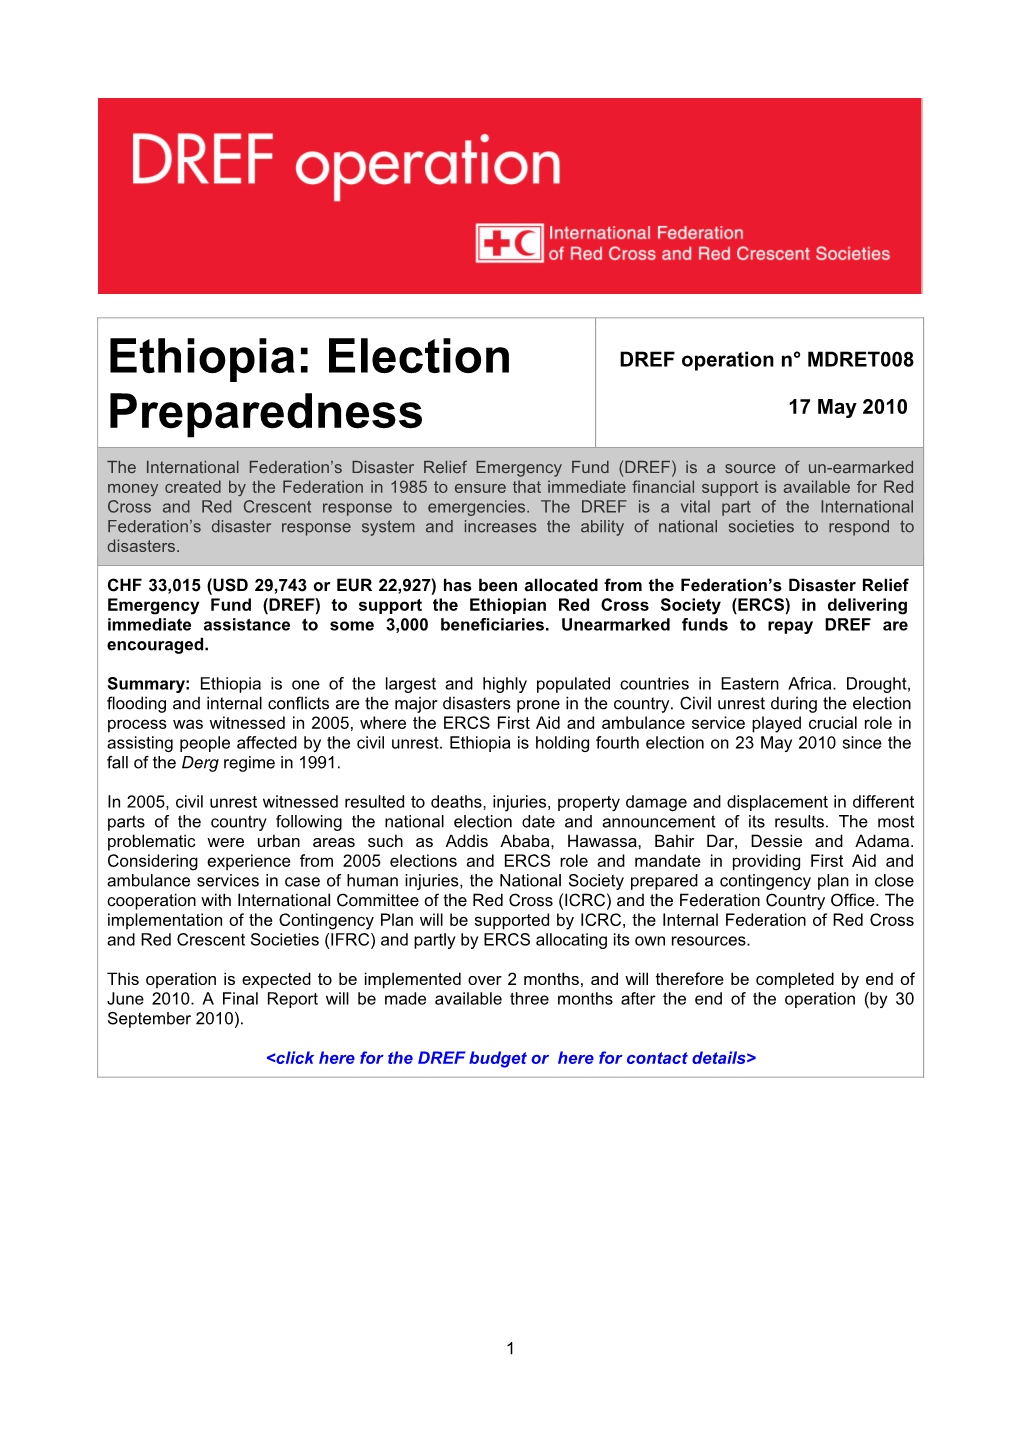 Ethiopia: Election Preparedness